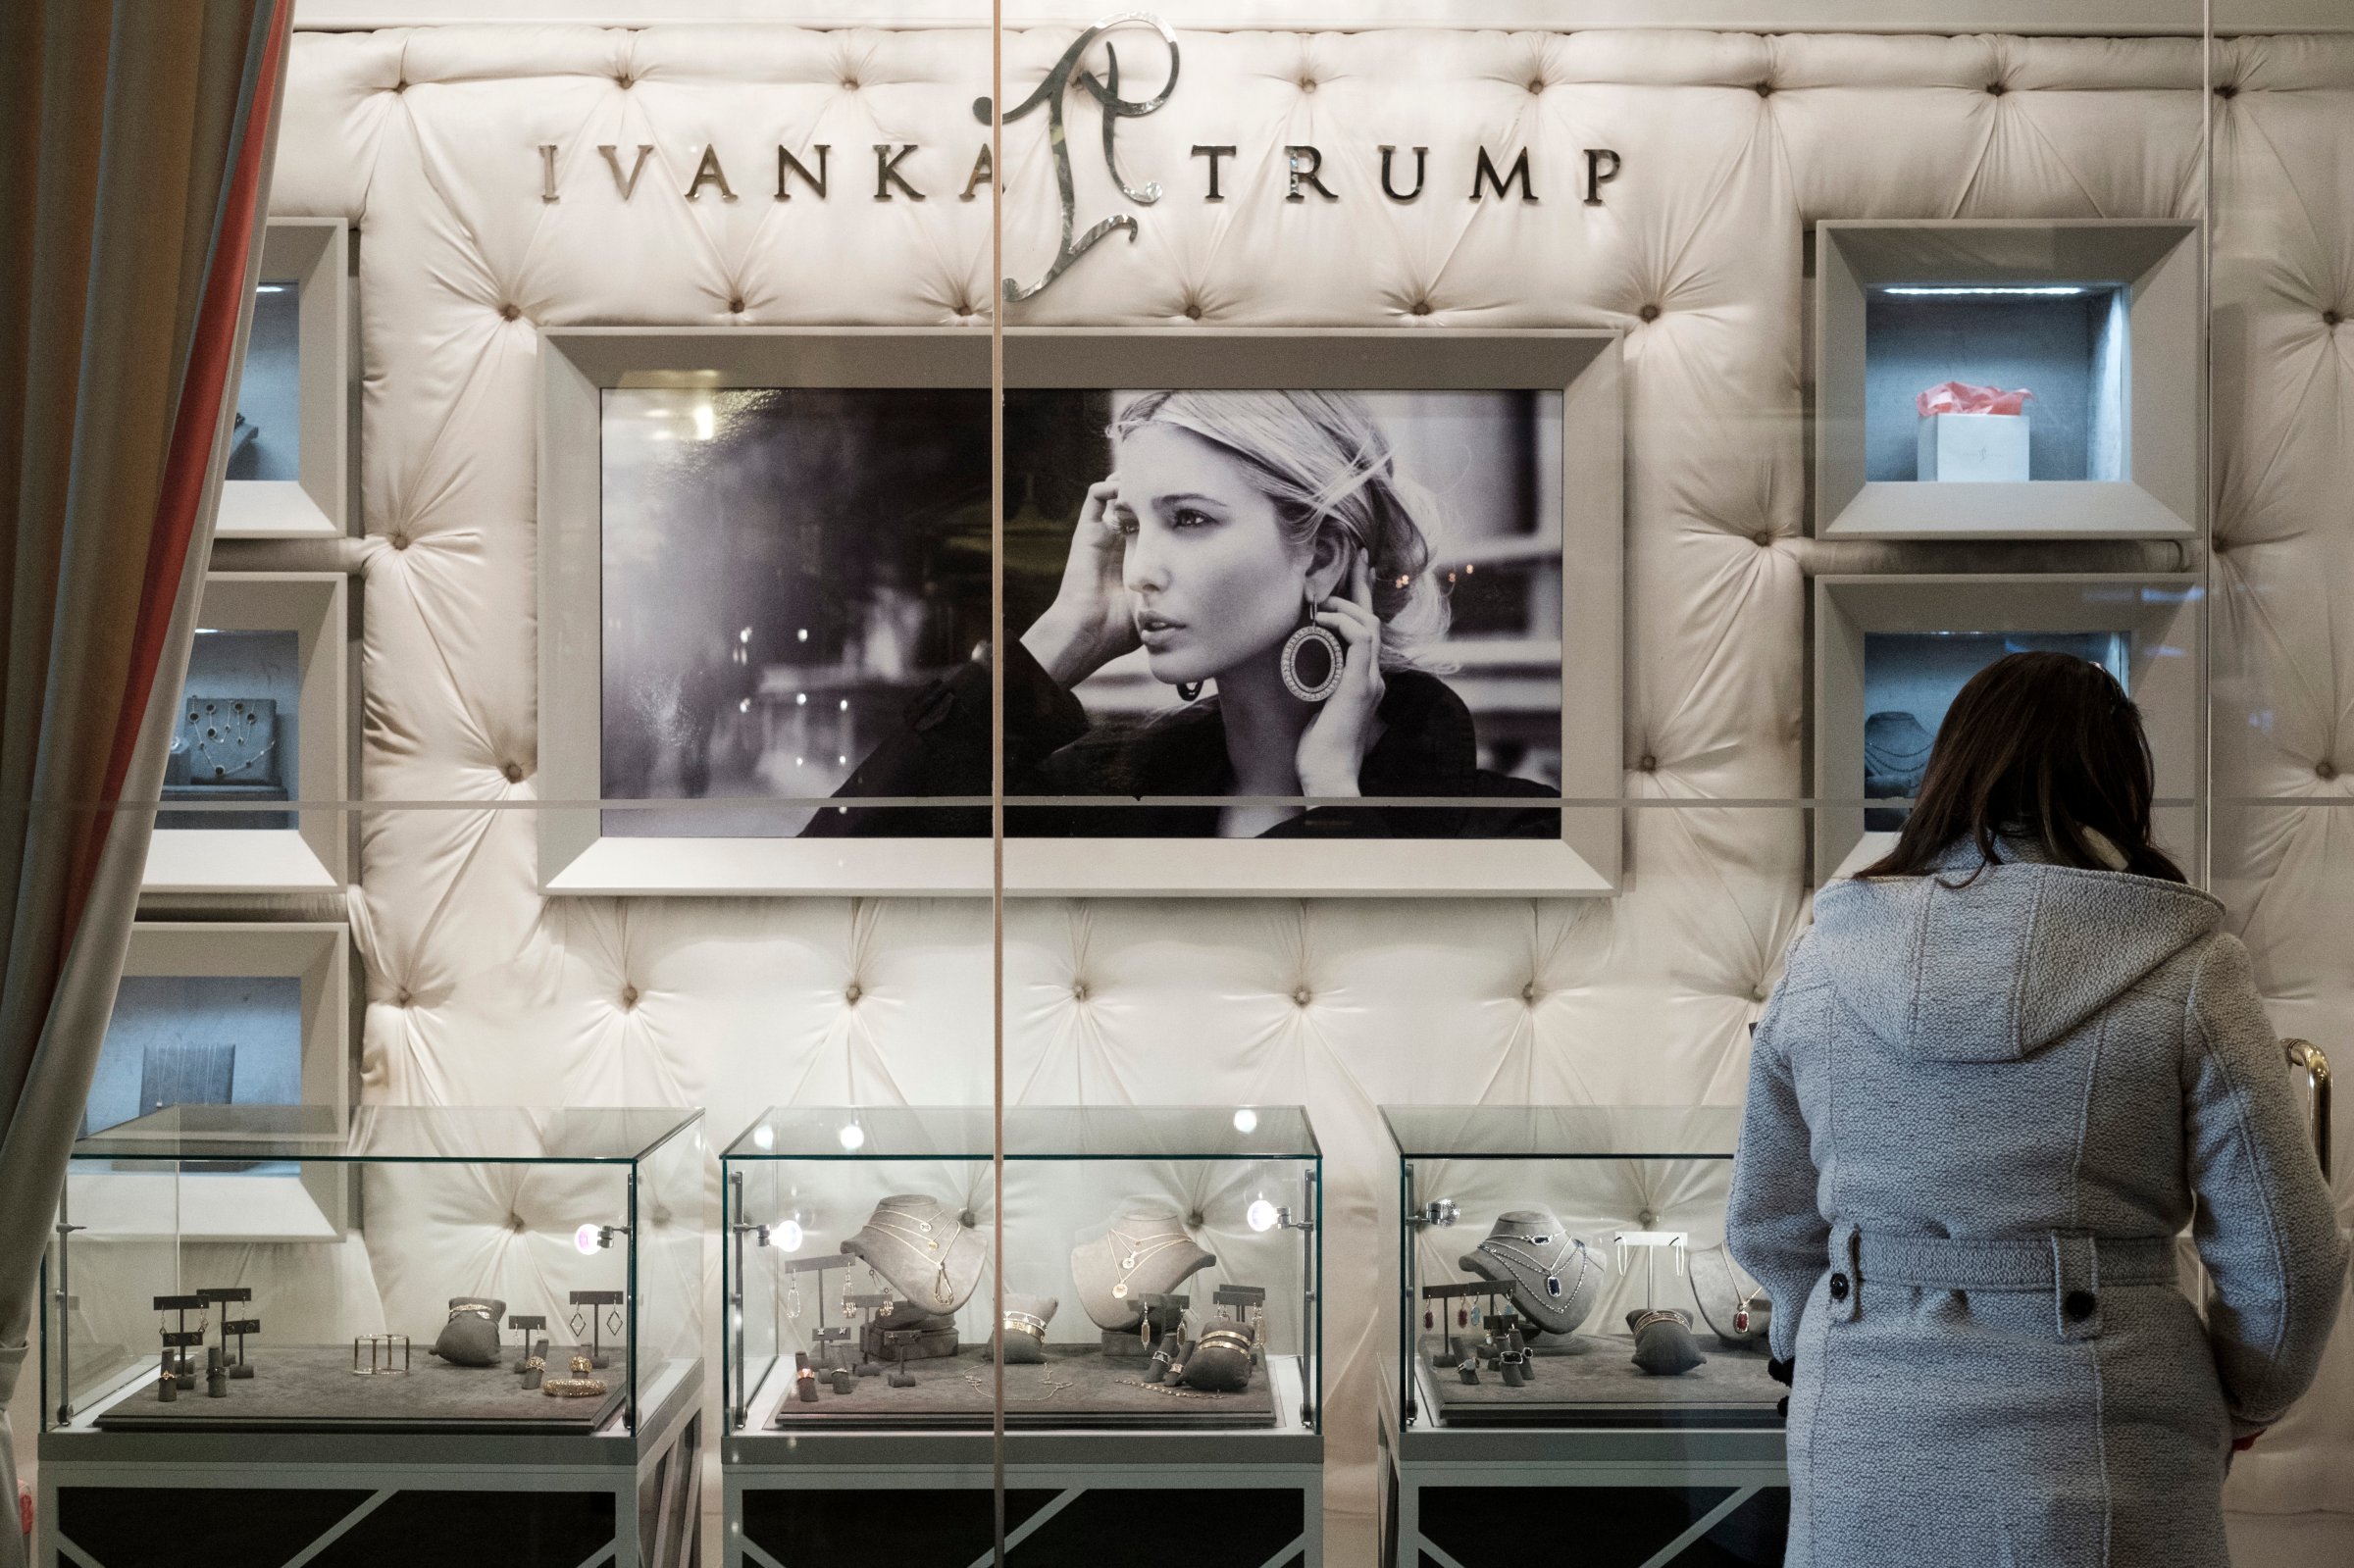 Online Sales For Ivanka Trump Brand Drop 26 Percent In January